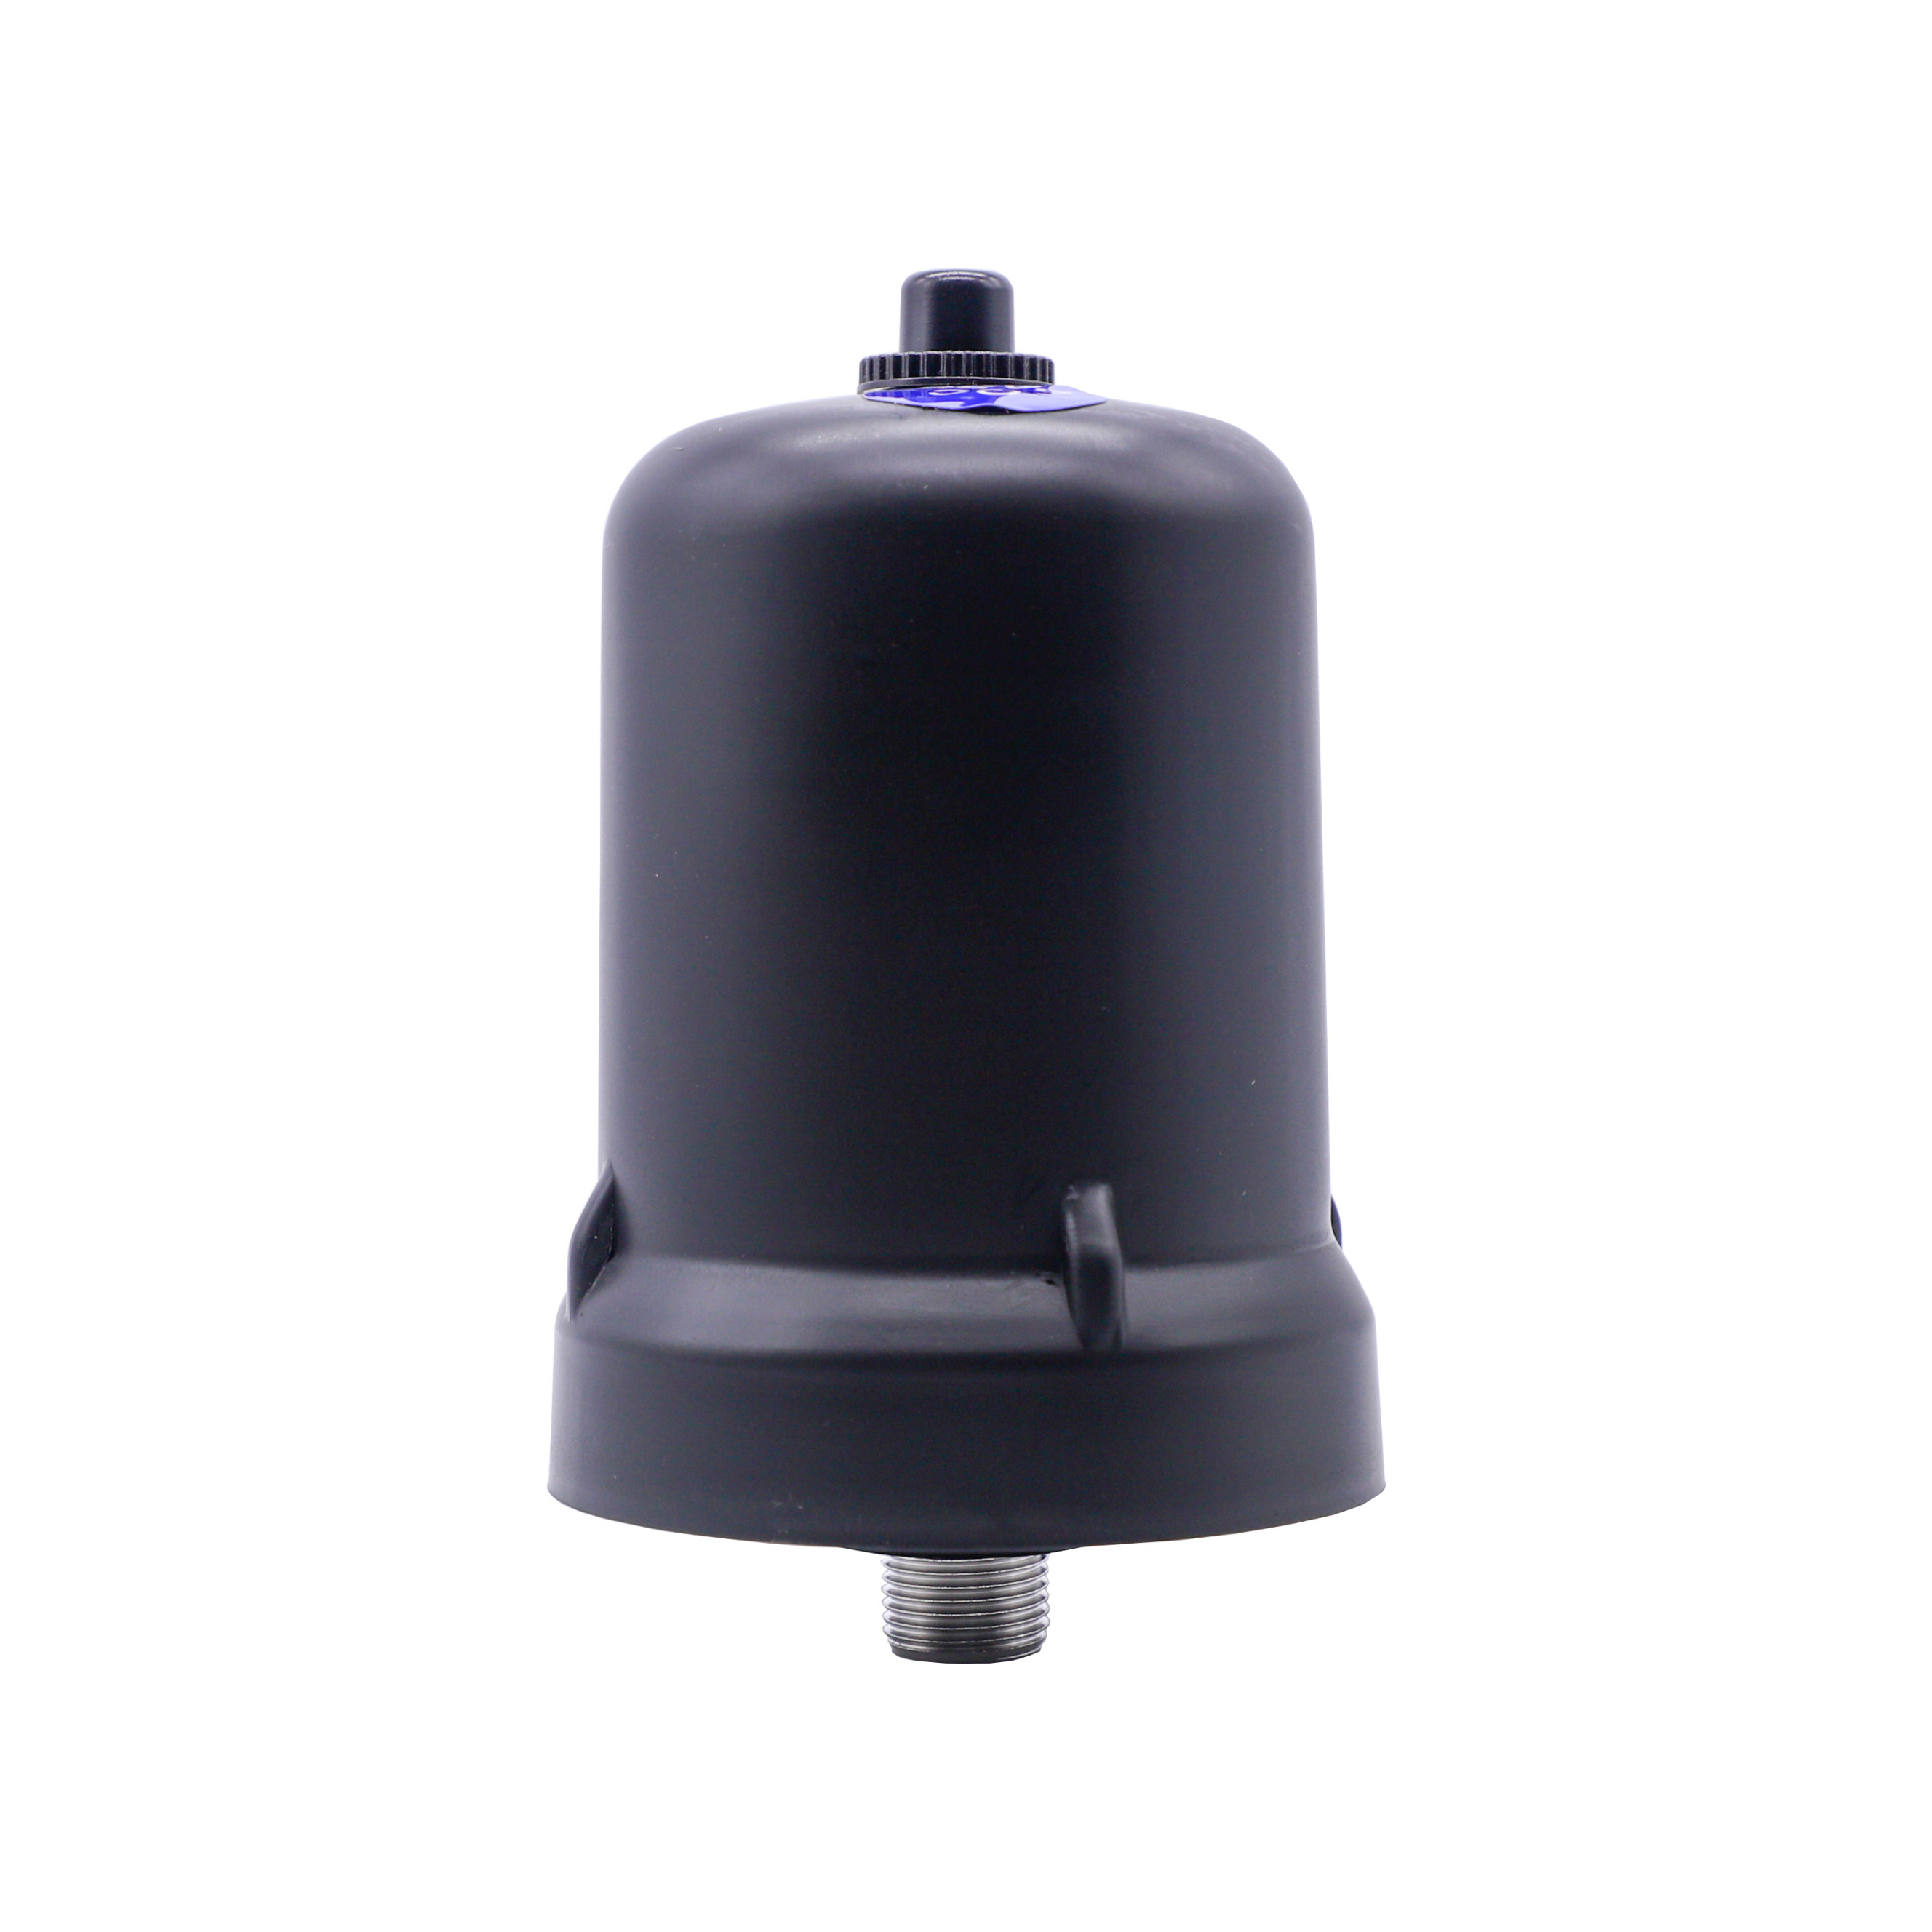 0.5 liter pressure tank for water pump